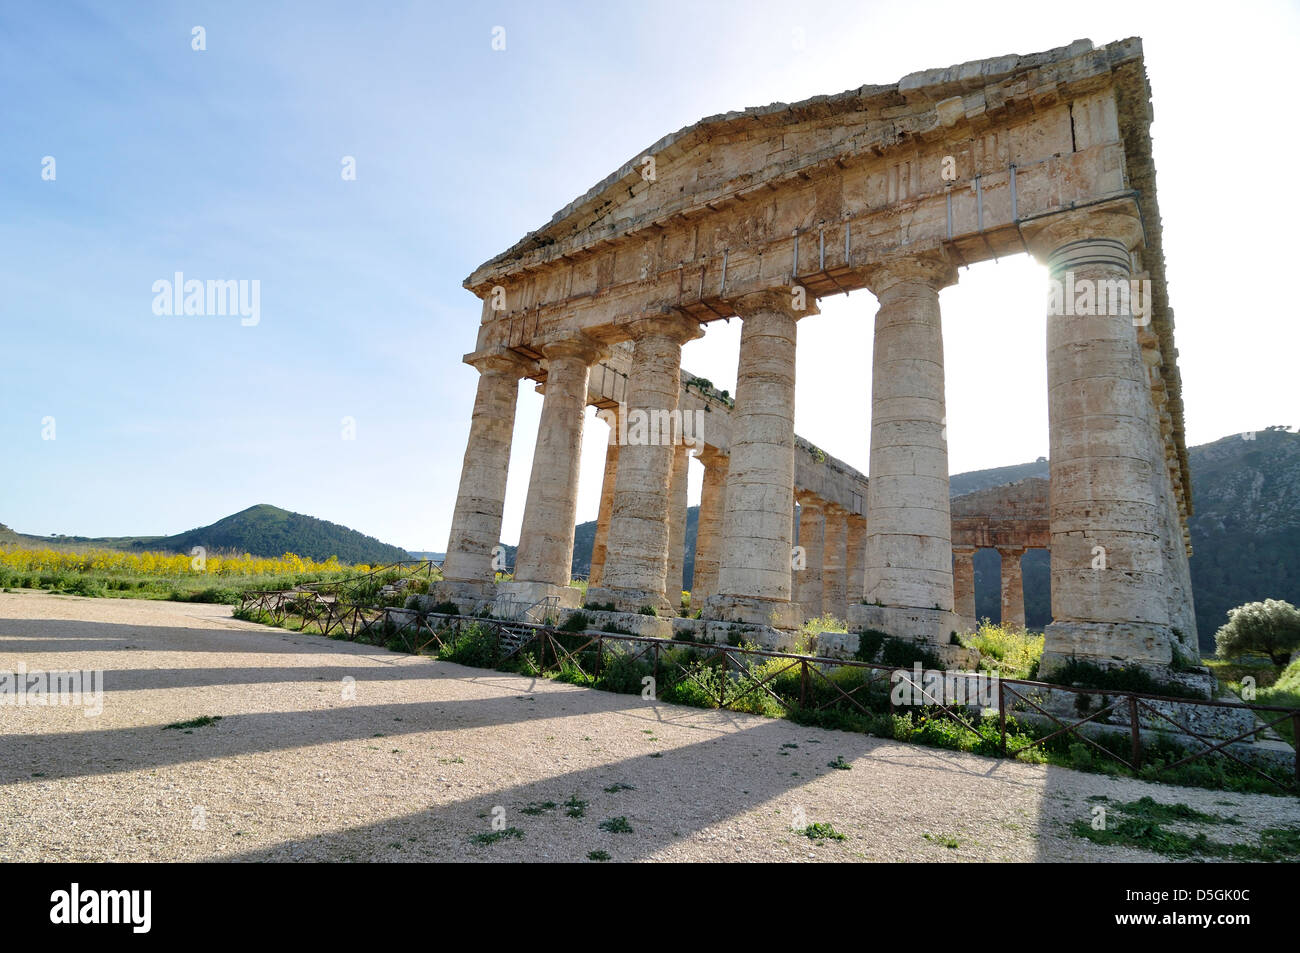 The Doric temple of Segesta, Sicily, Italy. Stock Photo